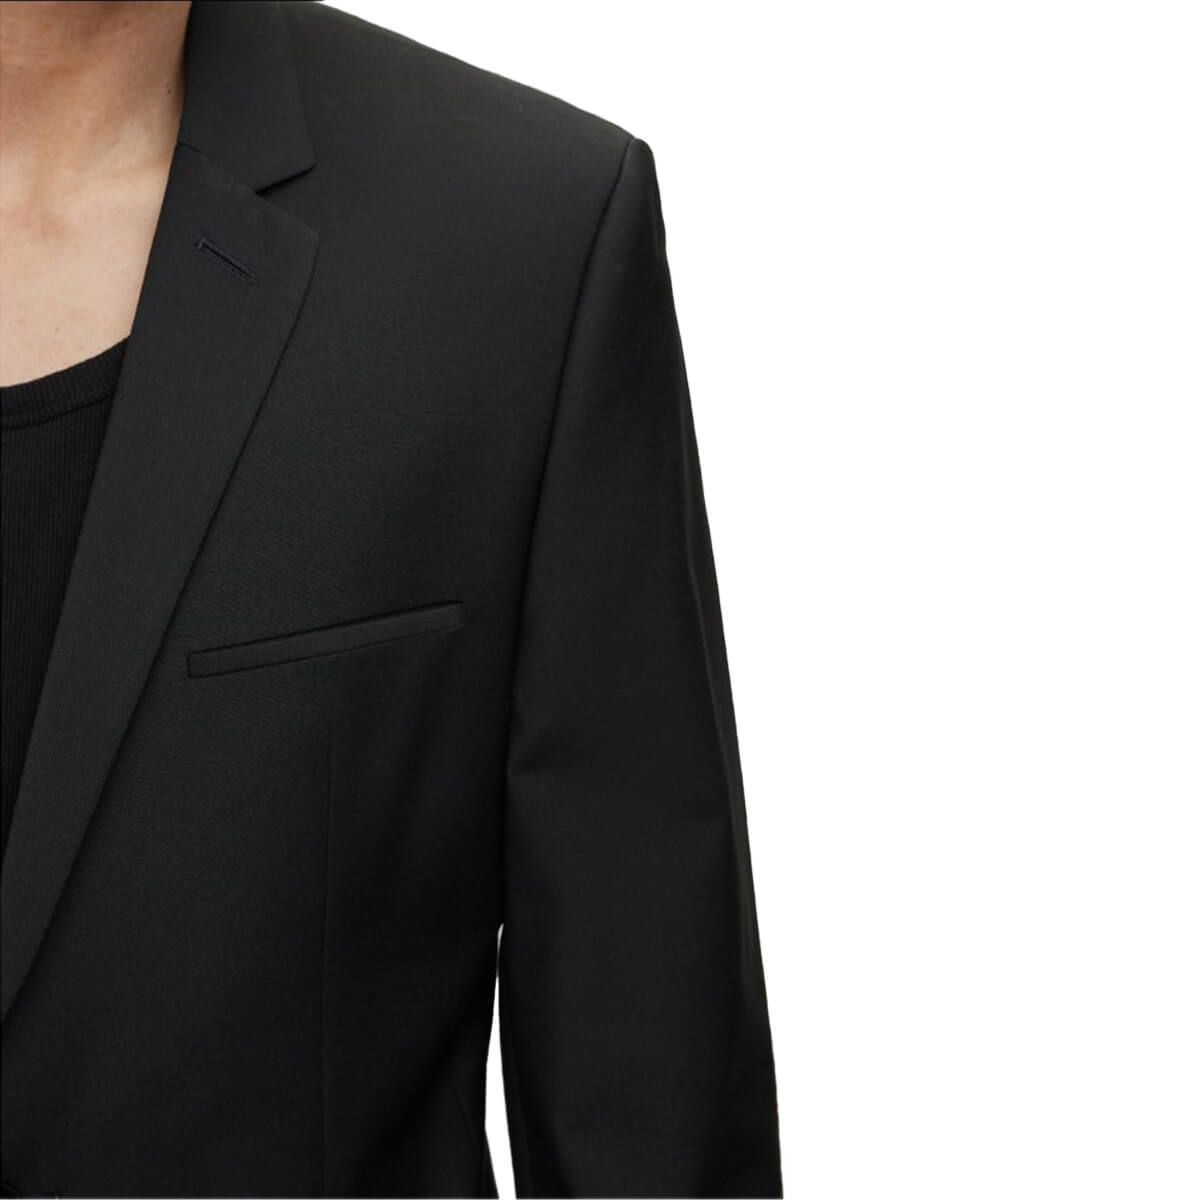 Extra-Slim-Fit Suit In A Super-Flex Wool Blend